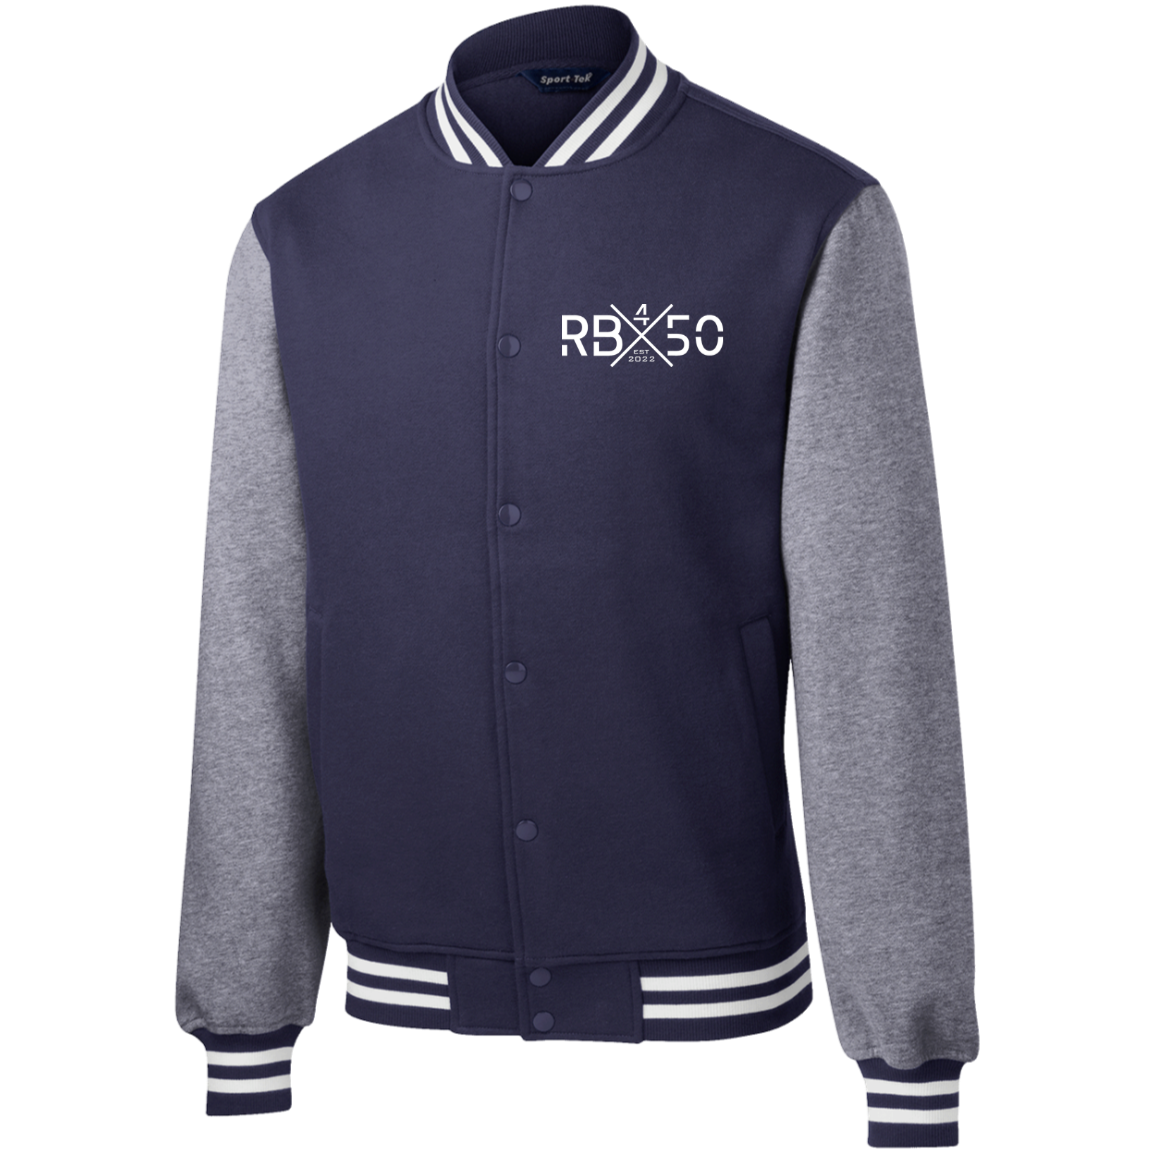 RB450 Fleece Letterman Jacket